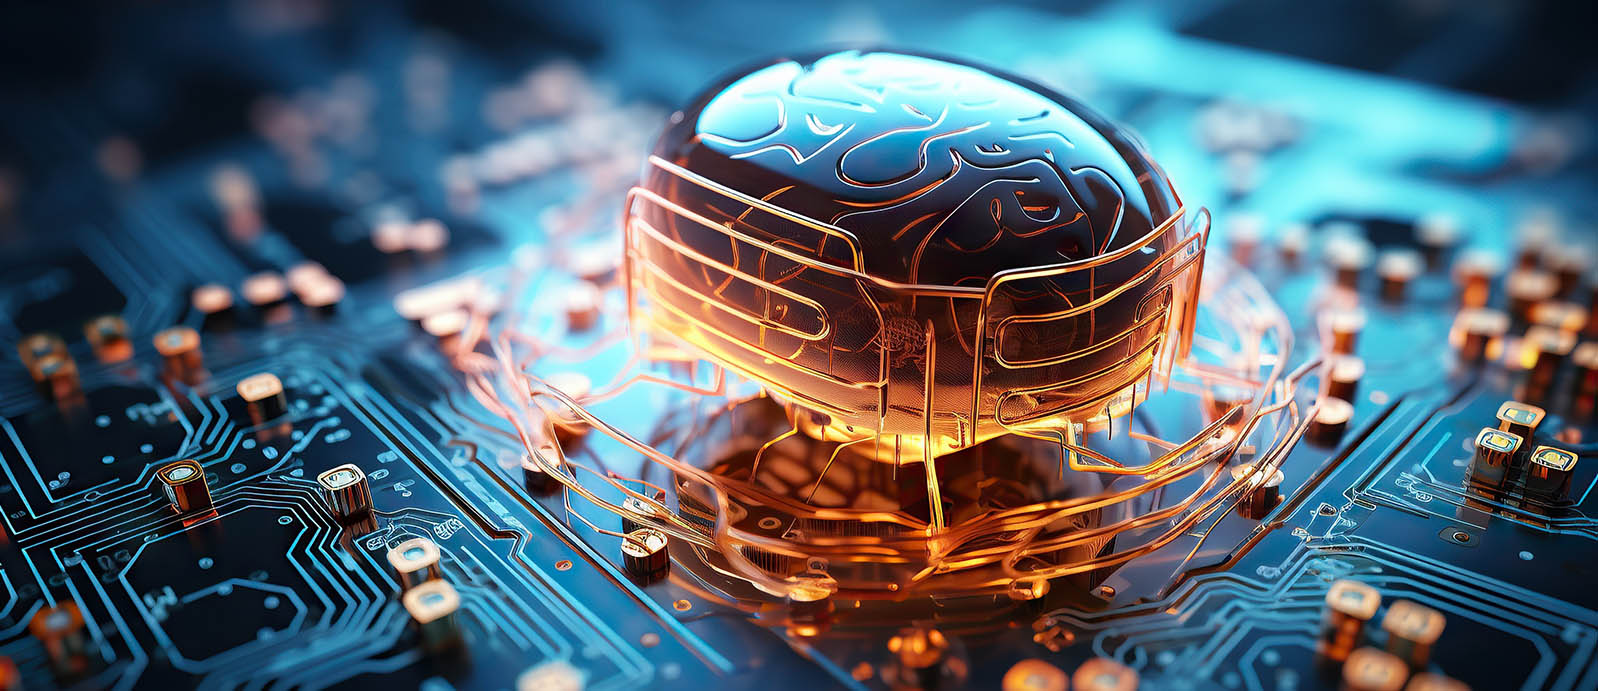 circuit board with metallic brain in a cradle